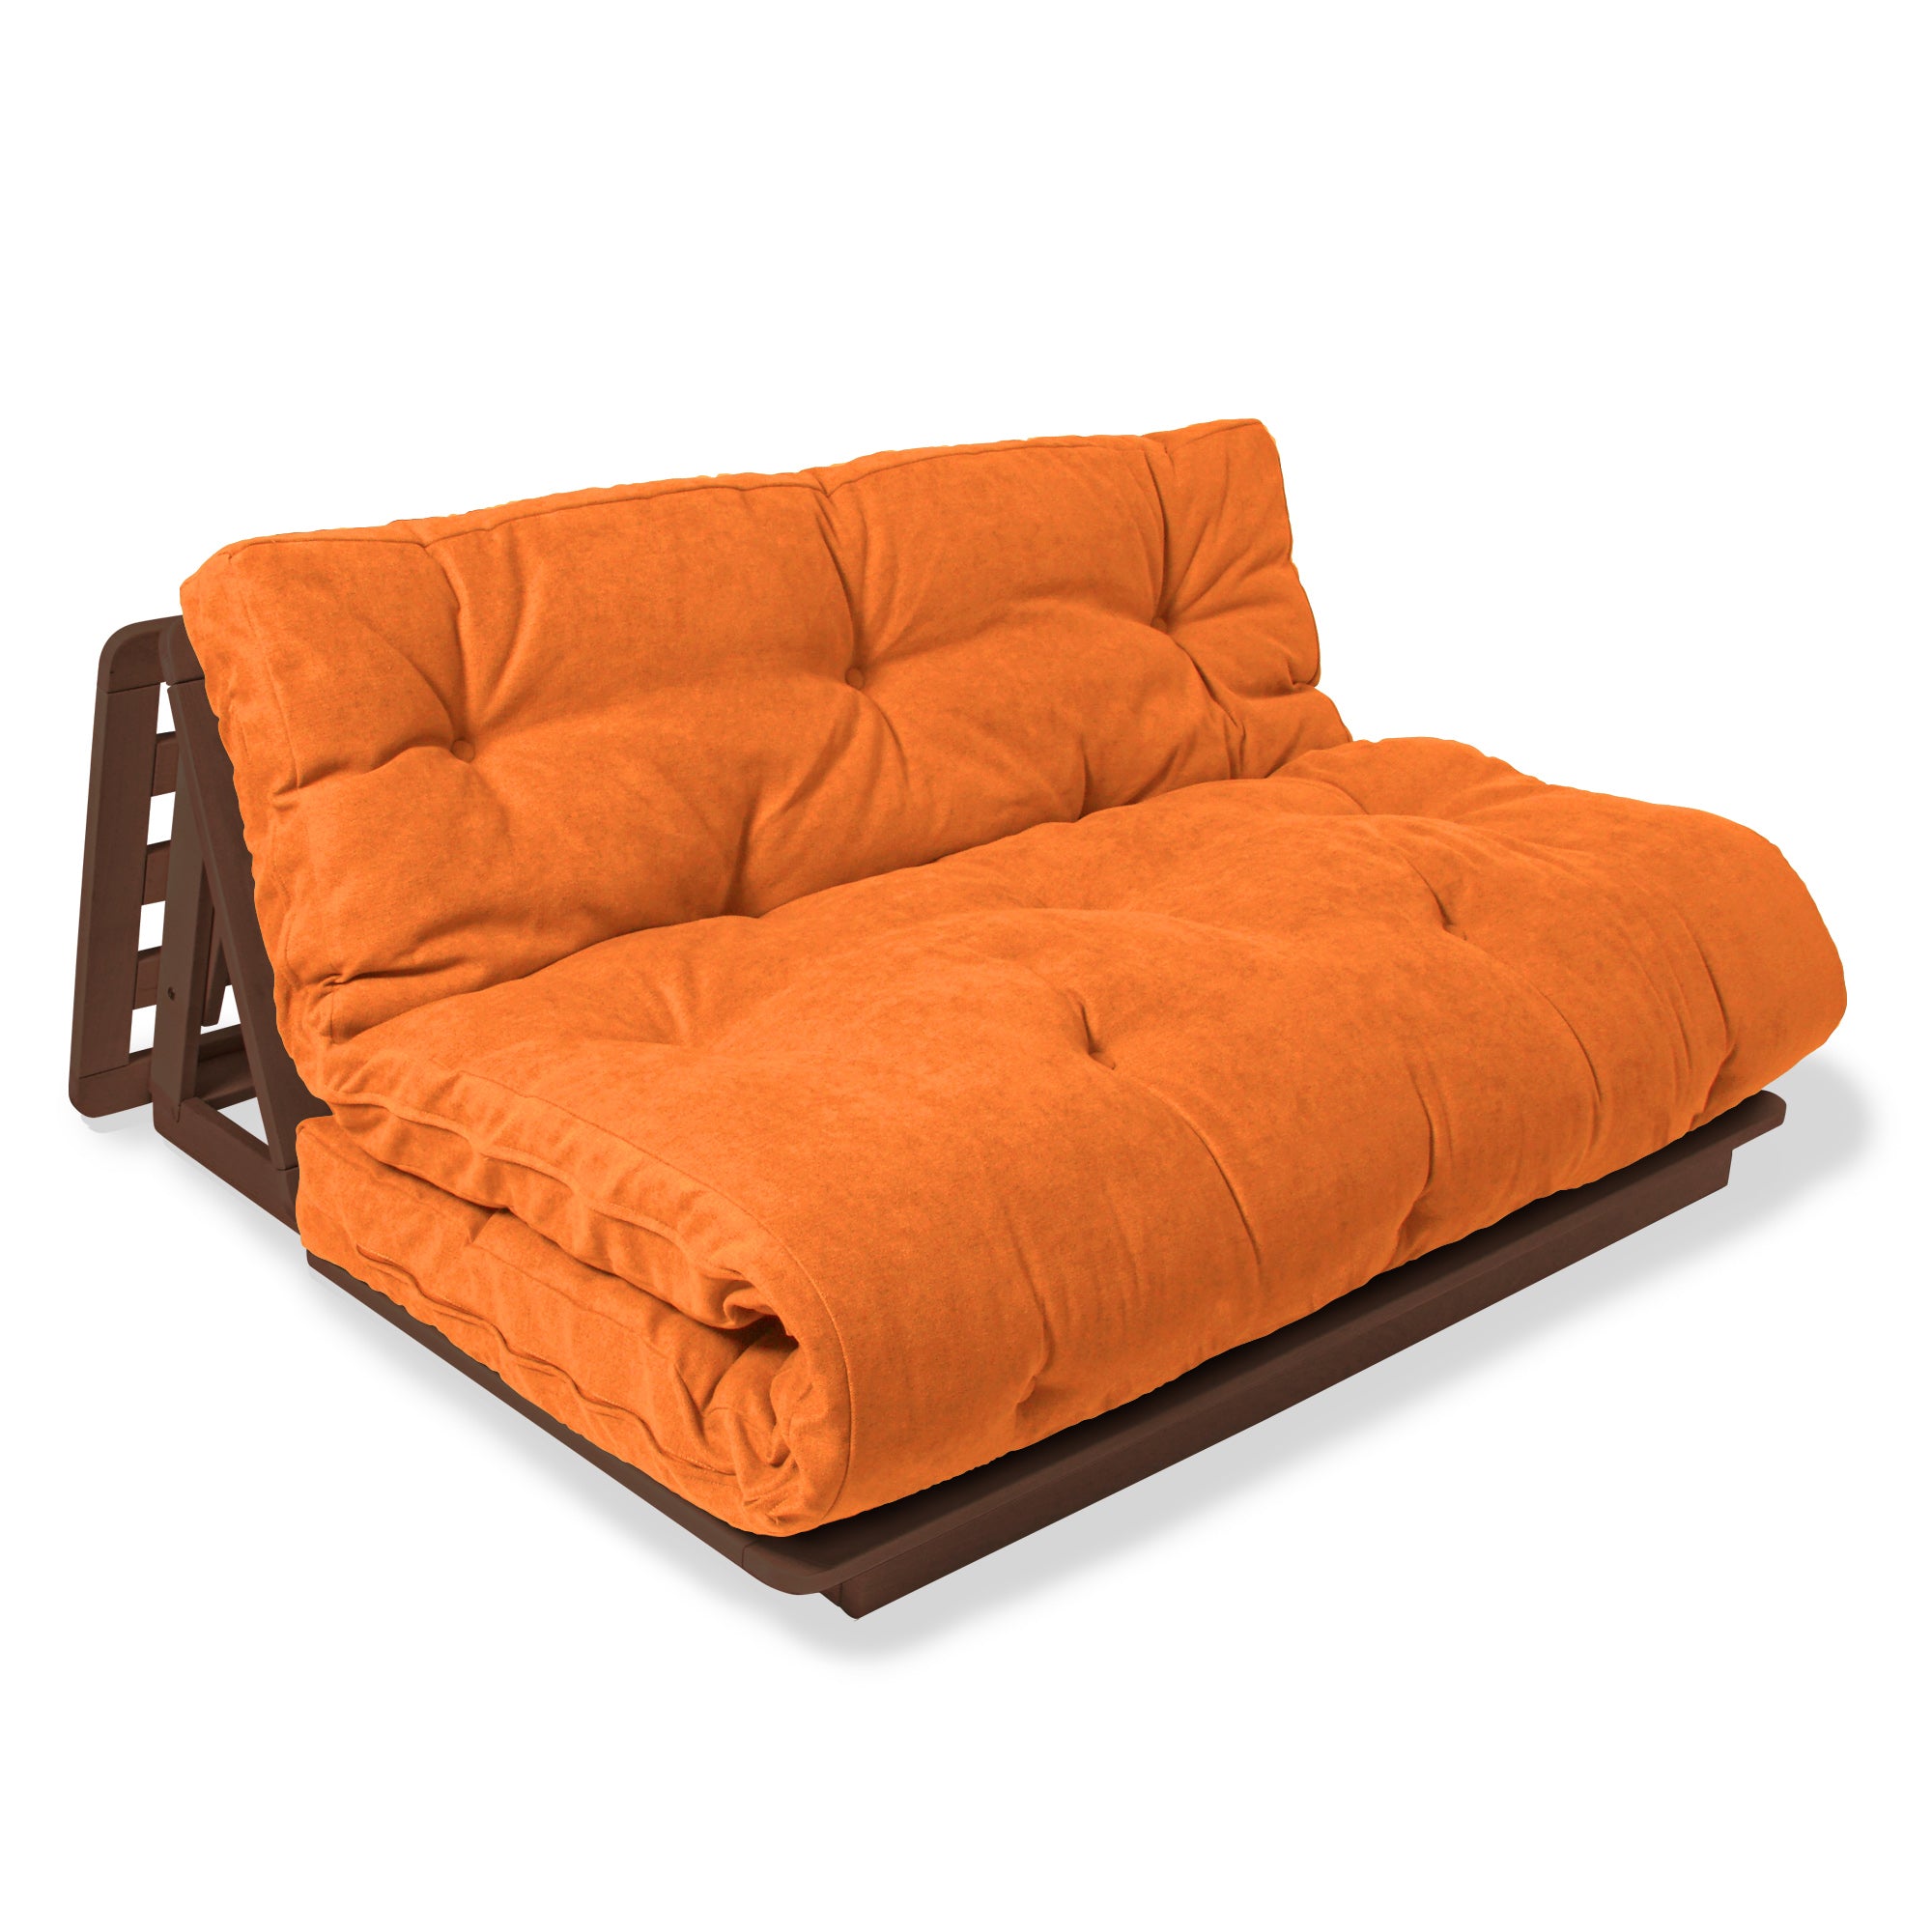 LAYTI-140 Futon Chair-walnut frame-orange fabric